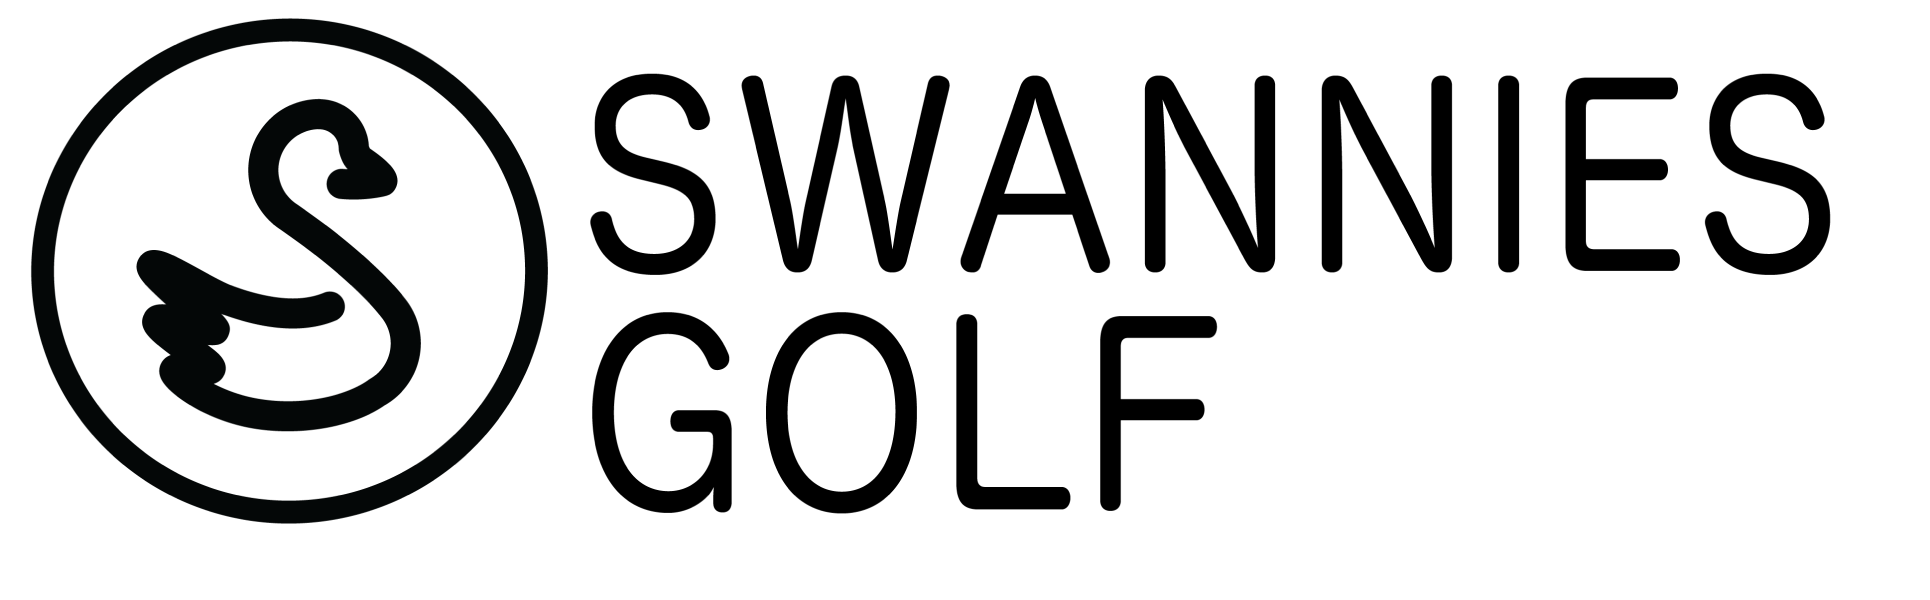 Swannies Golf logo